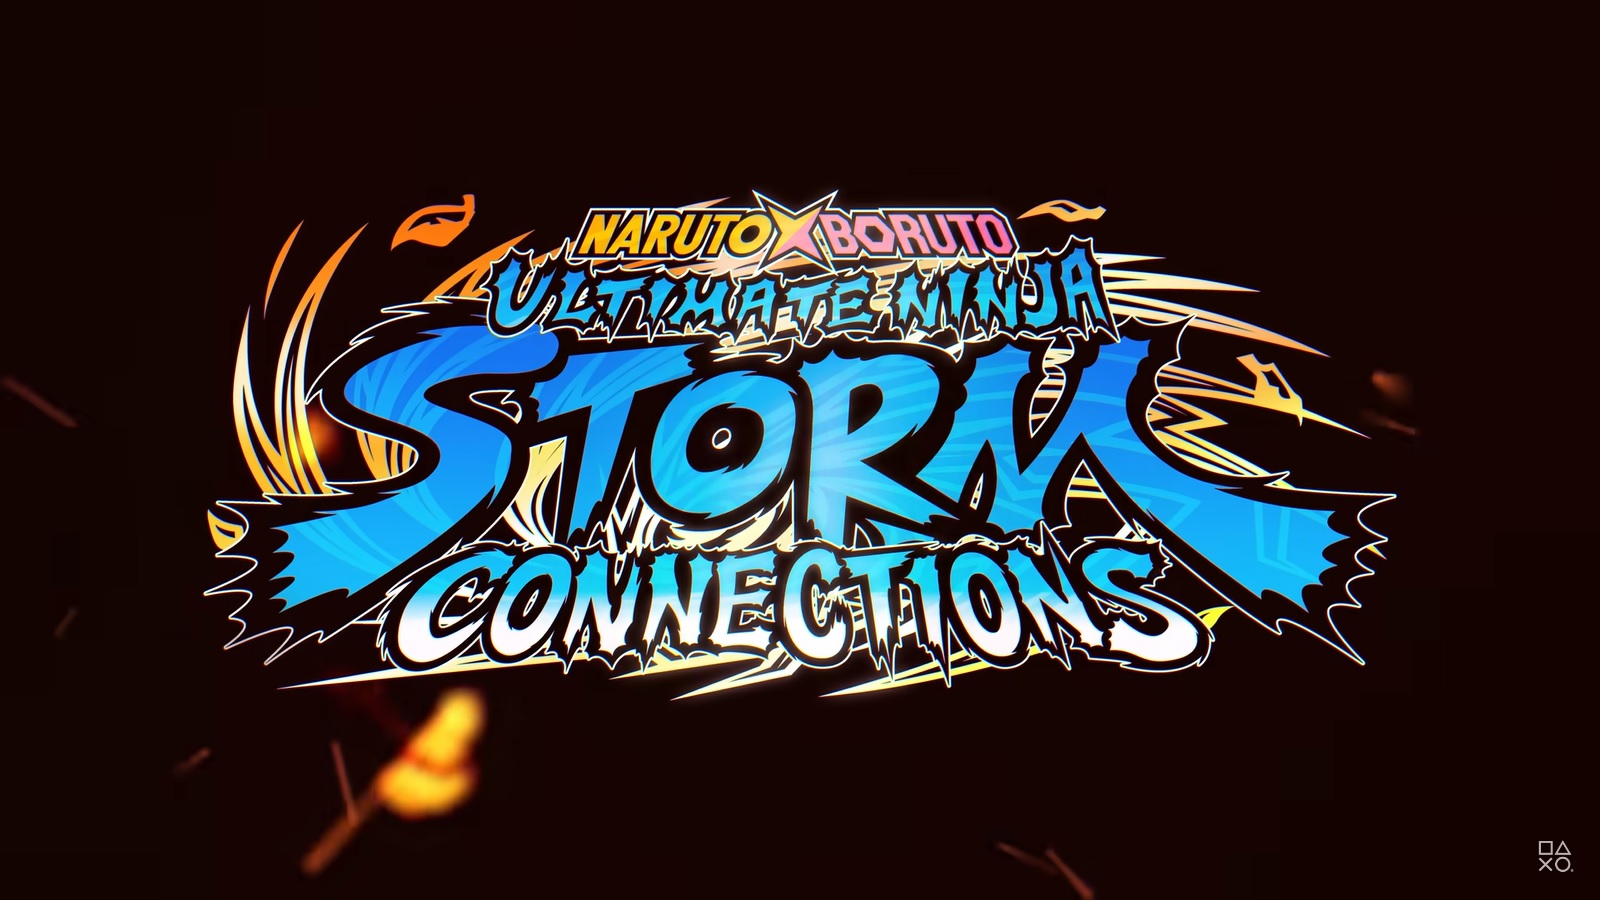 Naruto X Boruto trailer - Storm Connections Ninja analysis Ultimate Smartprix